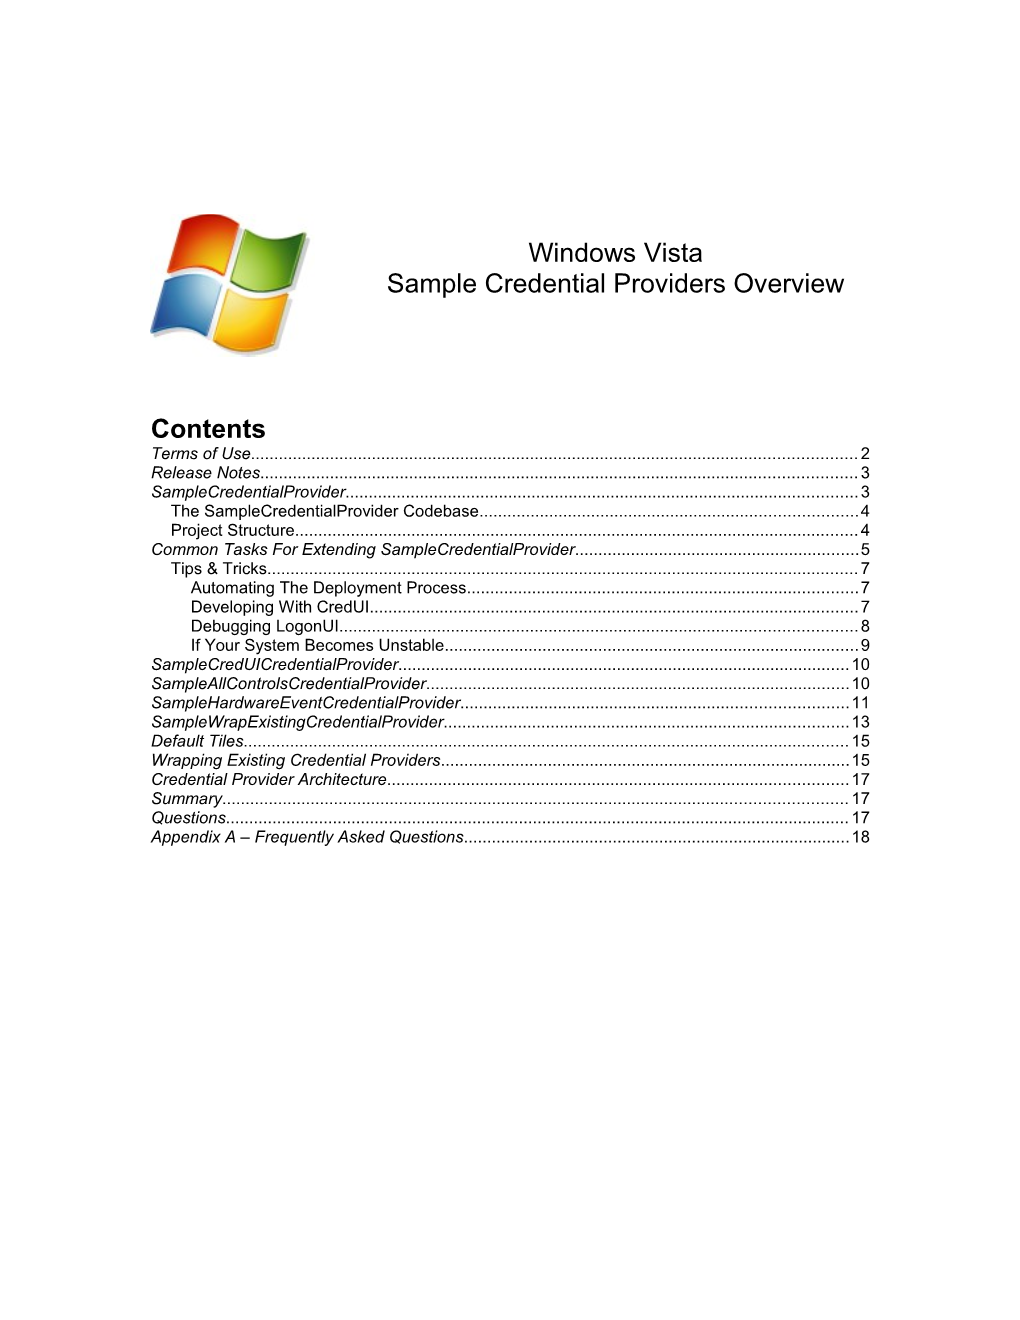 Windows Vista Sample Credential Provider Samples Overview